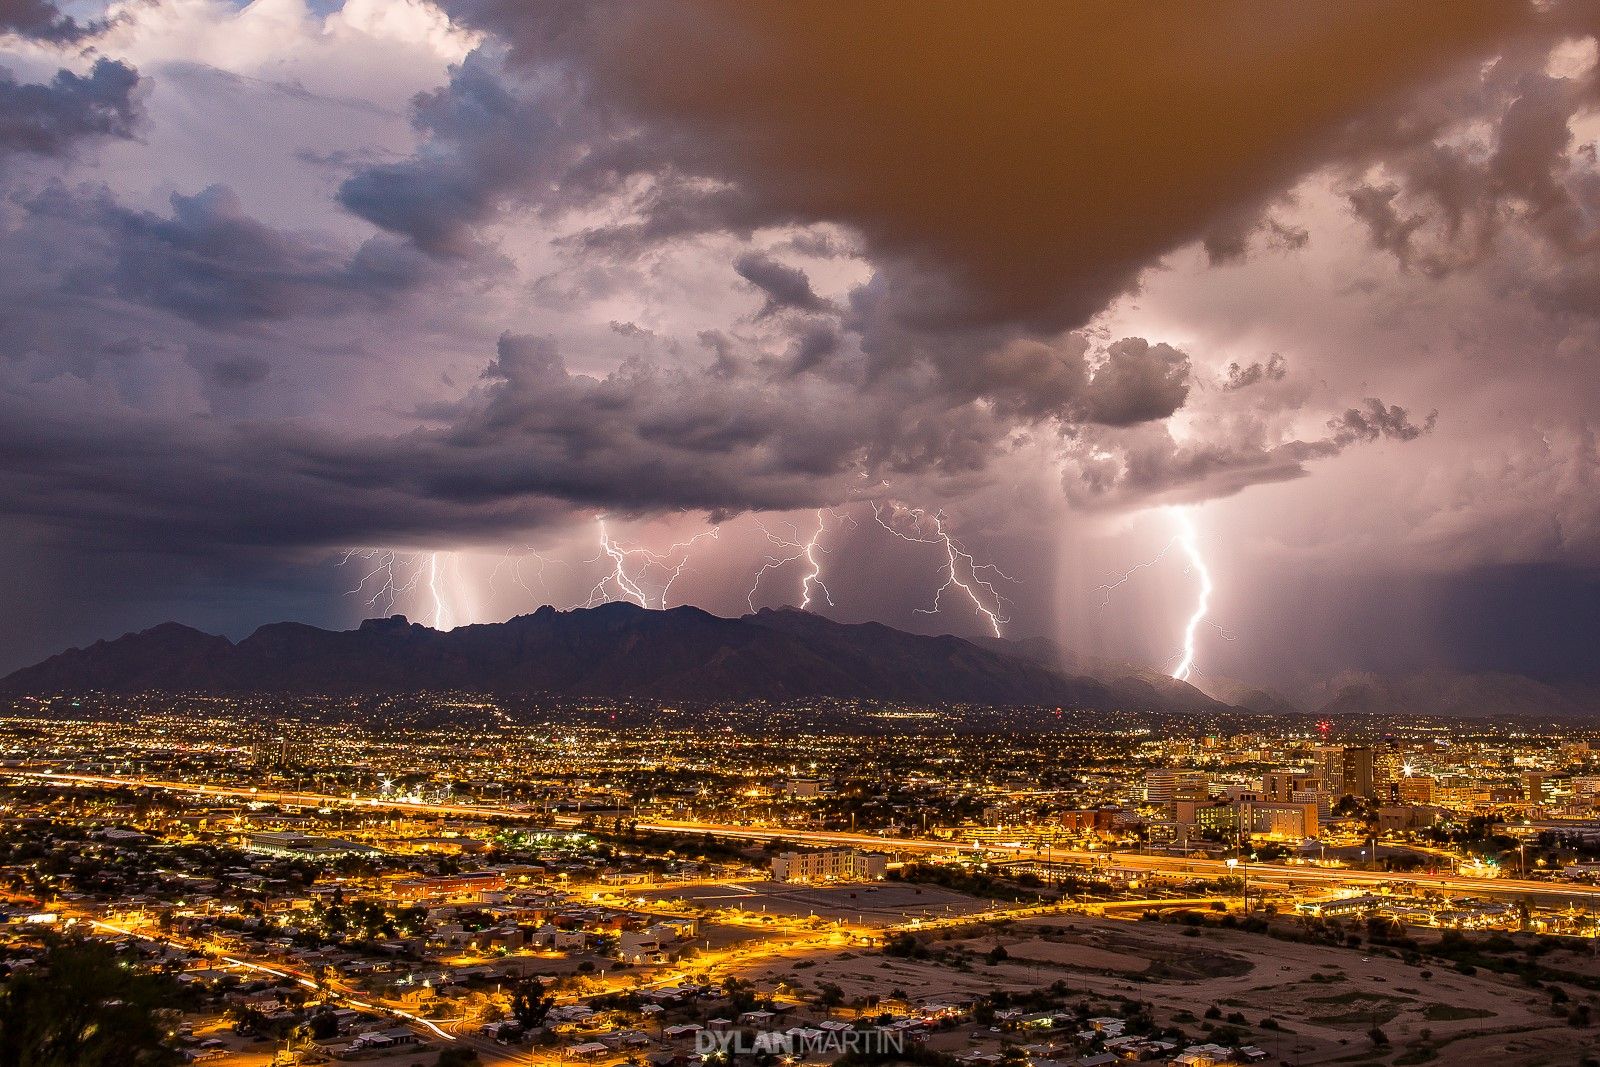 Lightning strikes twice Winners of the Star's monsoon photo contest